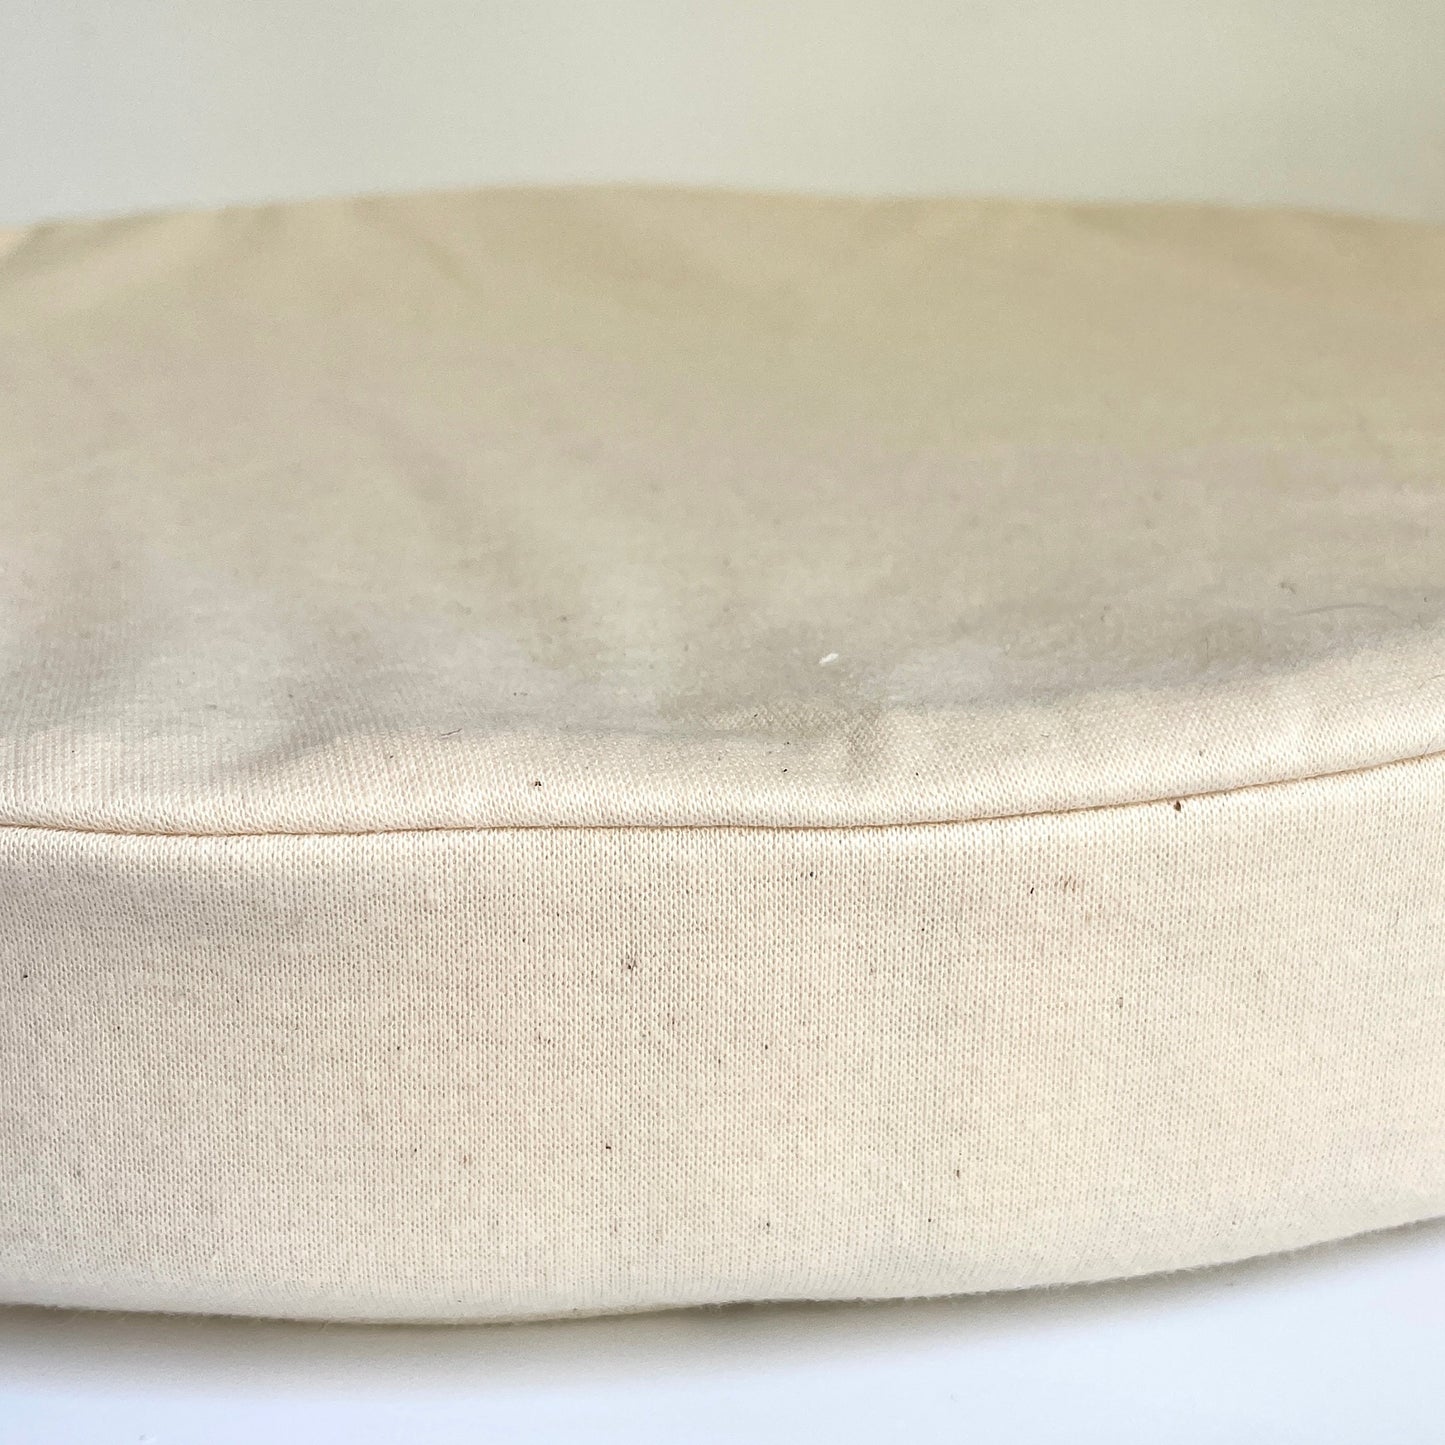 Waterproof Cat Bed Cover